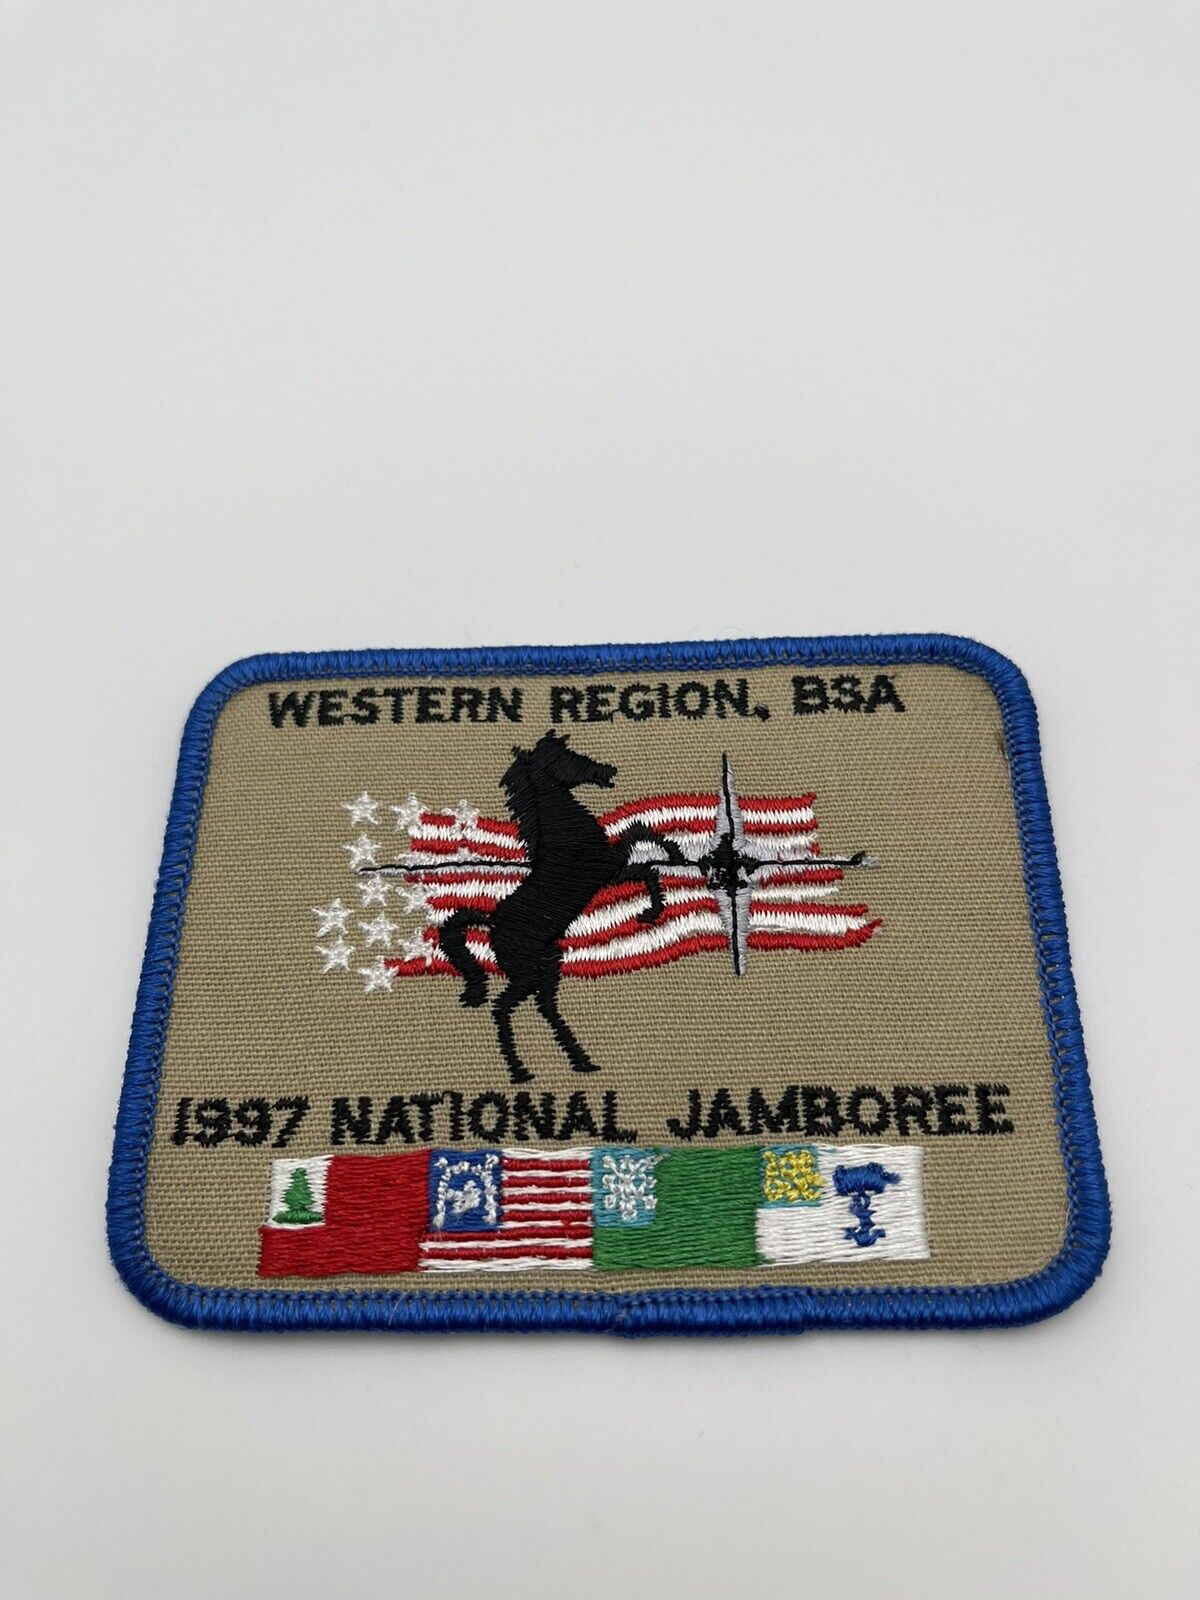 Boy Scouts BSA 1997 National Jamboree Western Region Patch